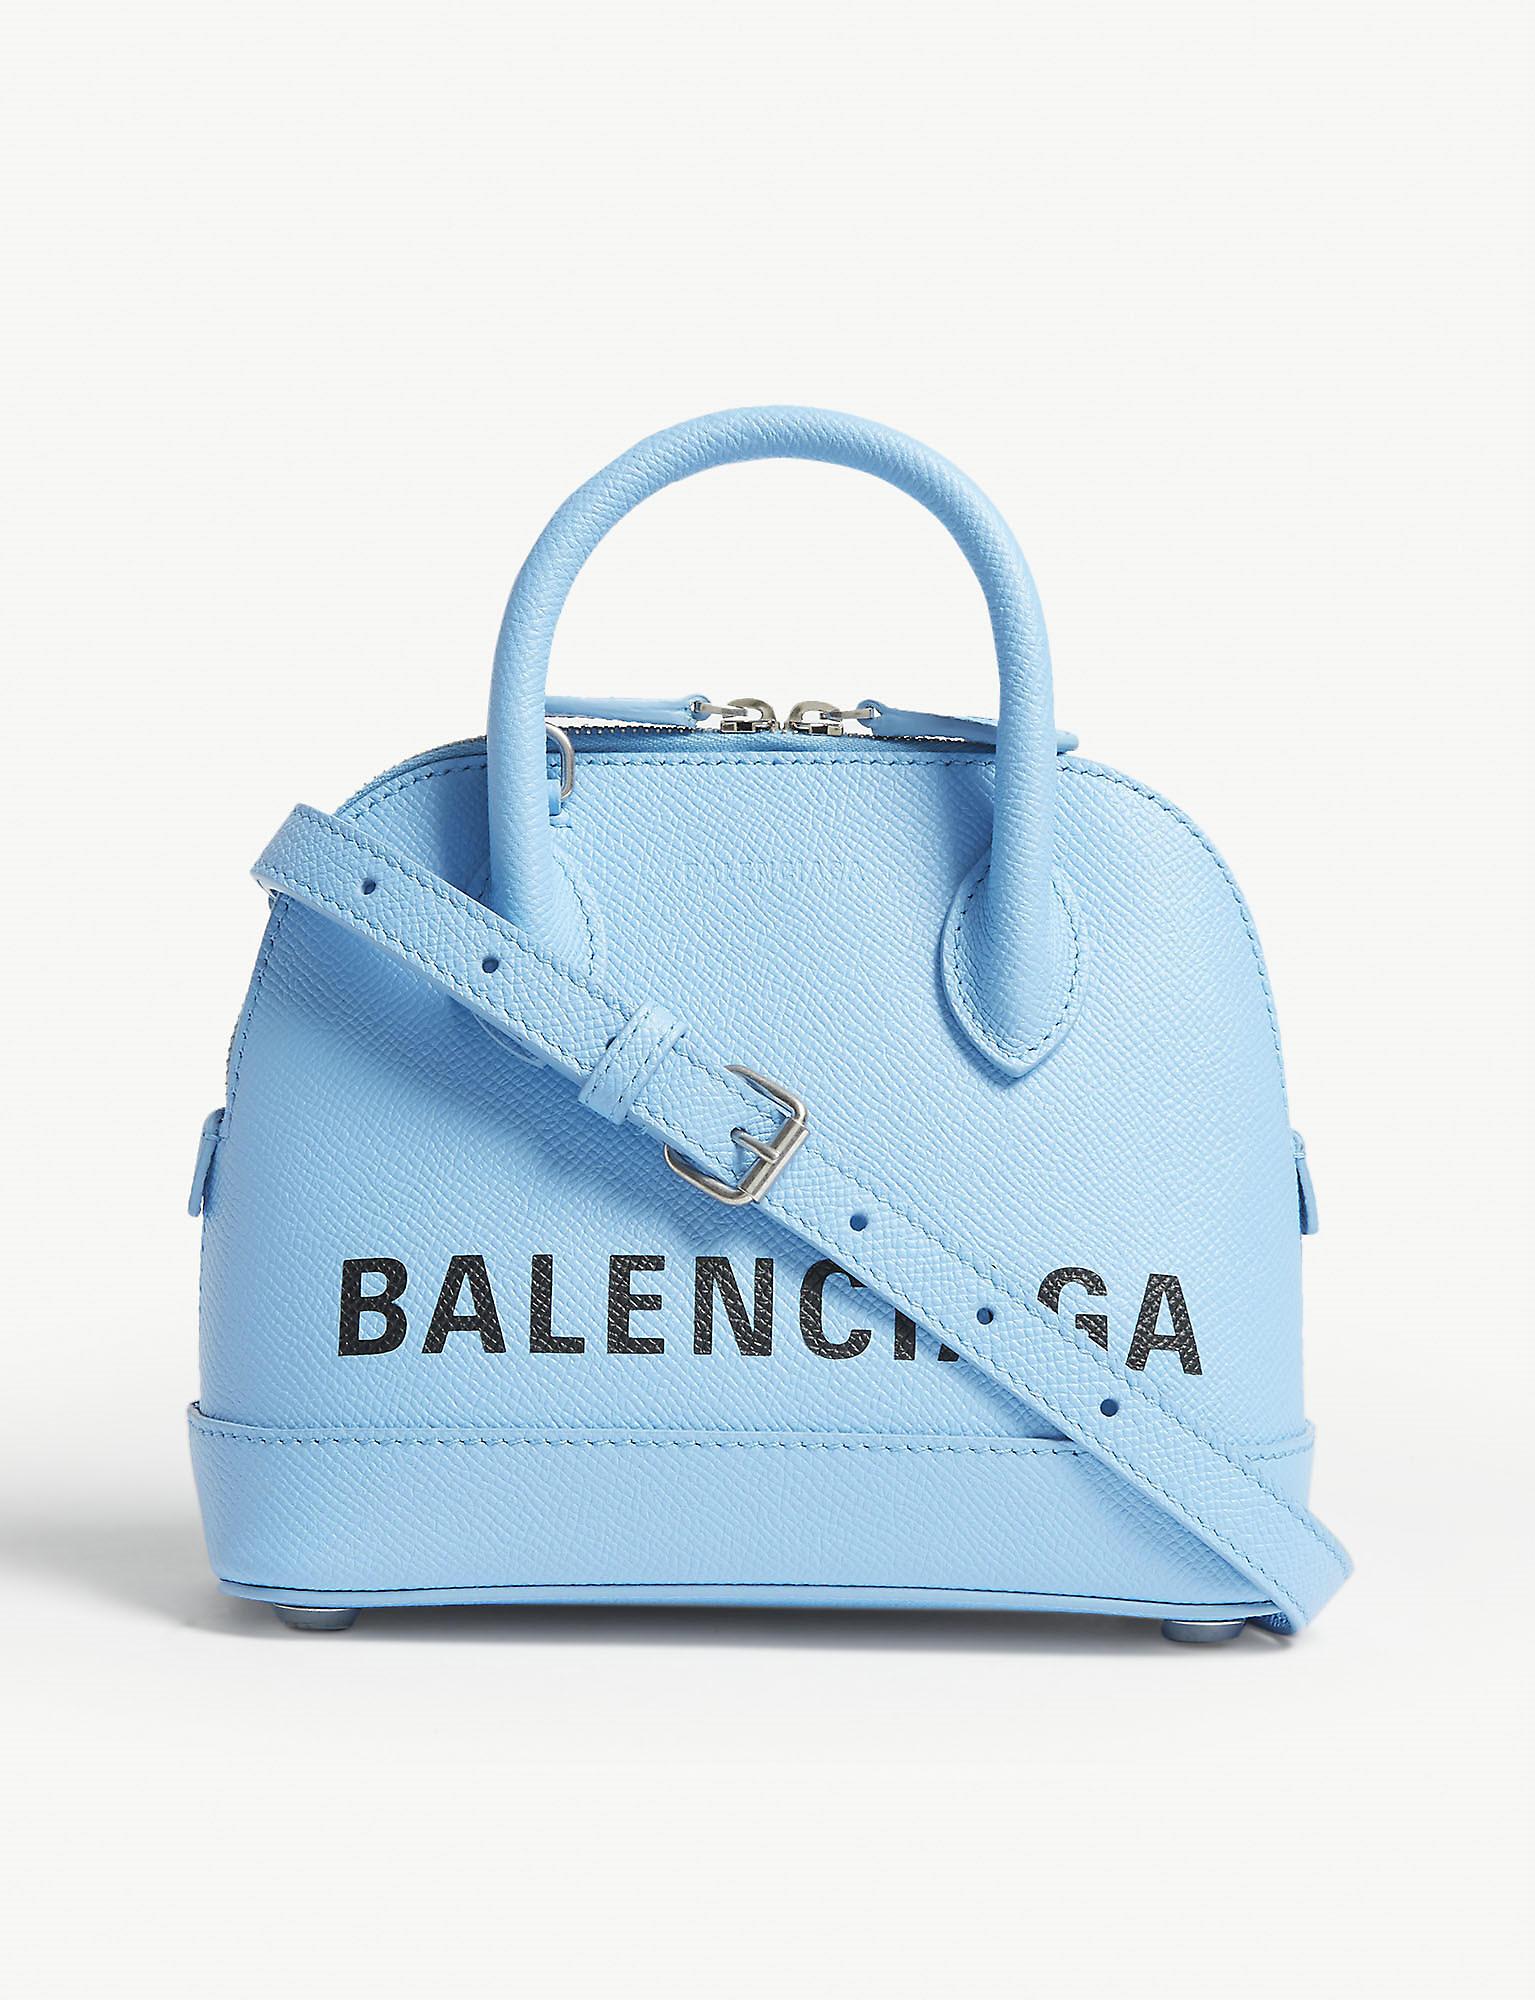 Balenciaga Leather Mini Ville Shoulder Bag in Baby Blue (Blue) | Lyst